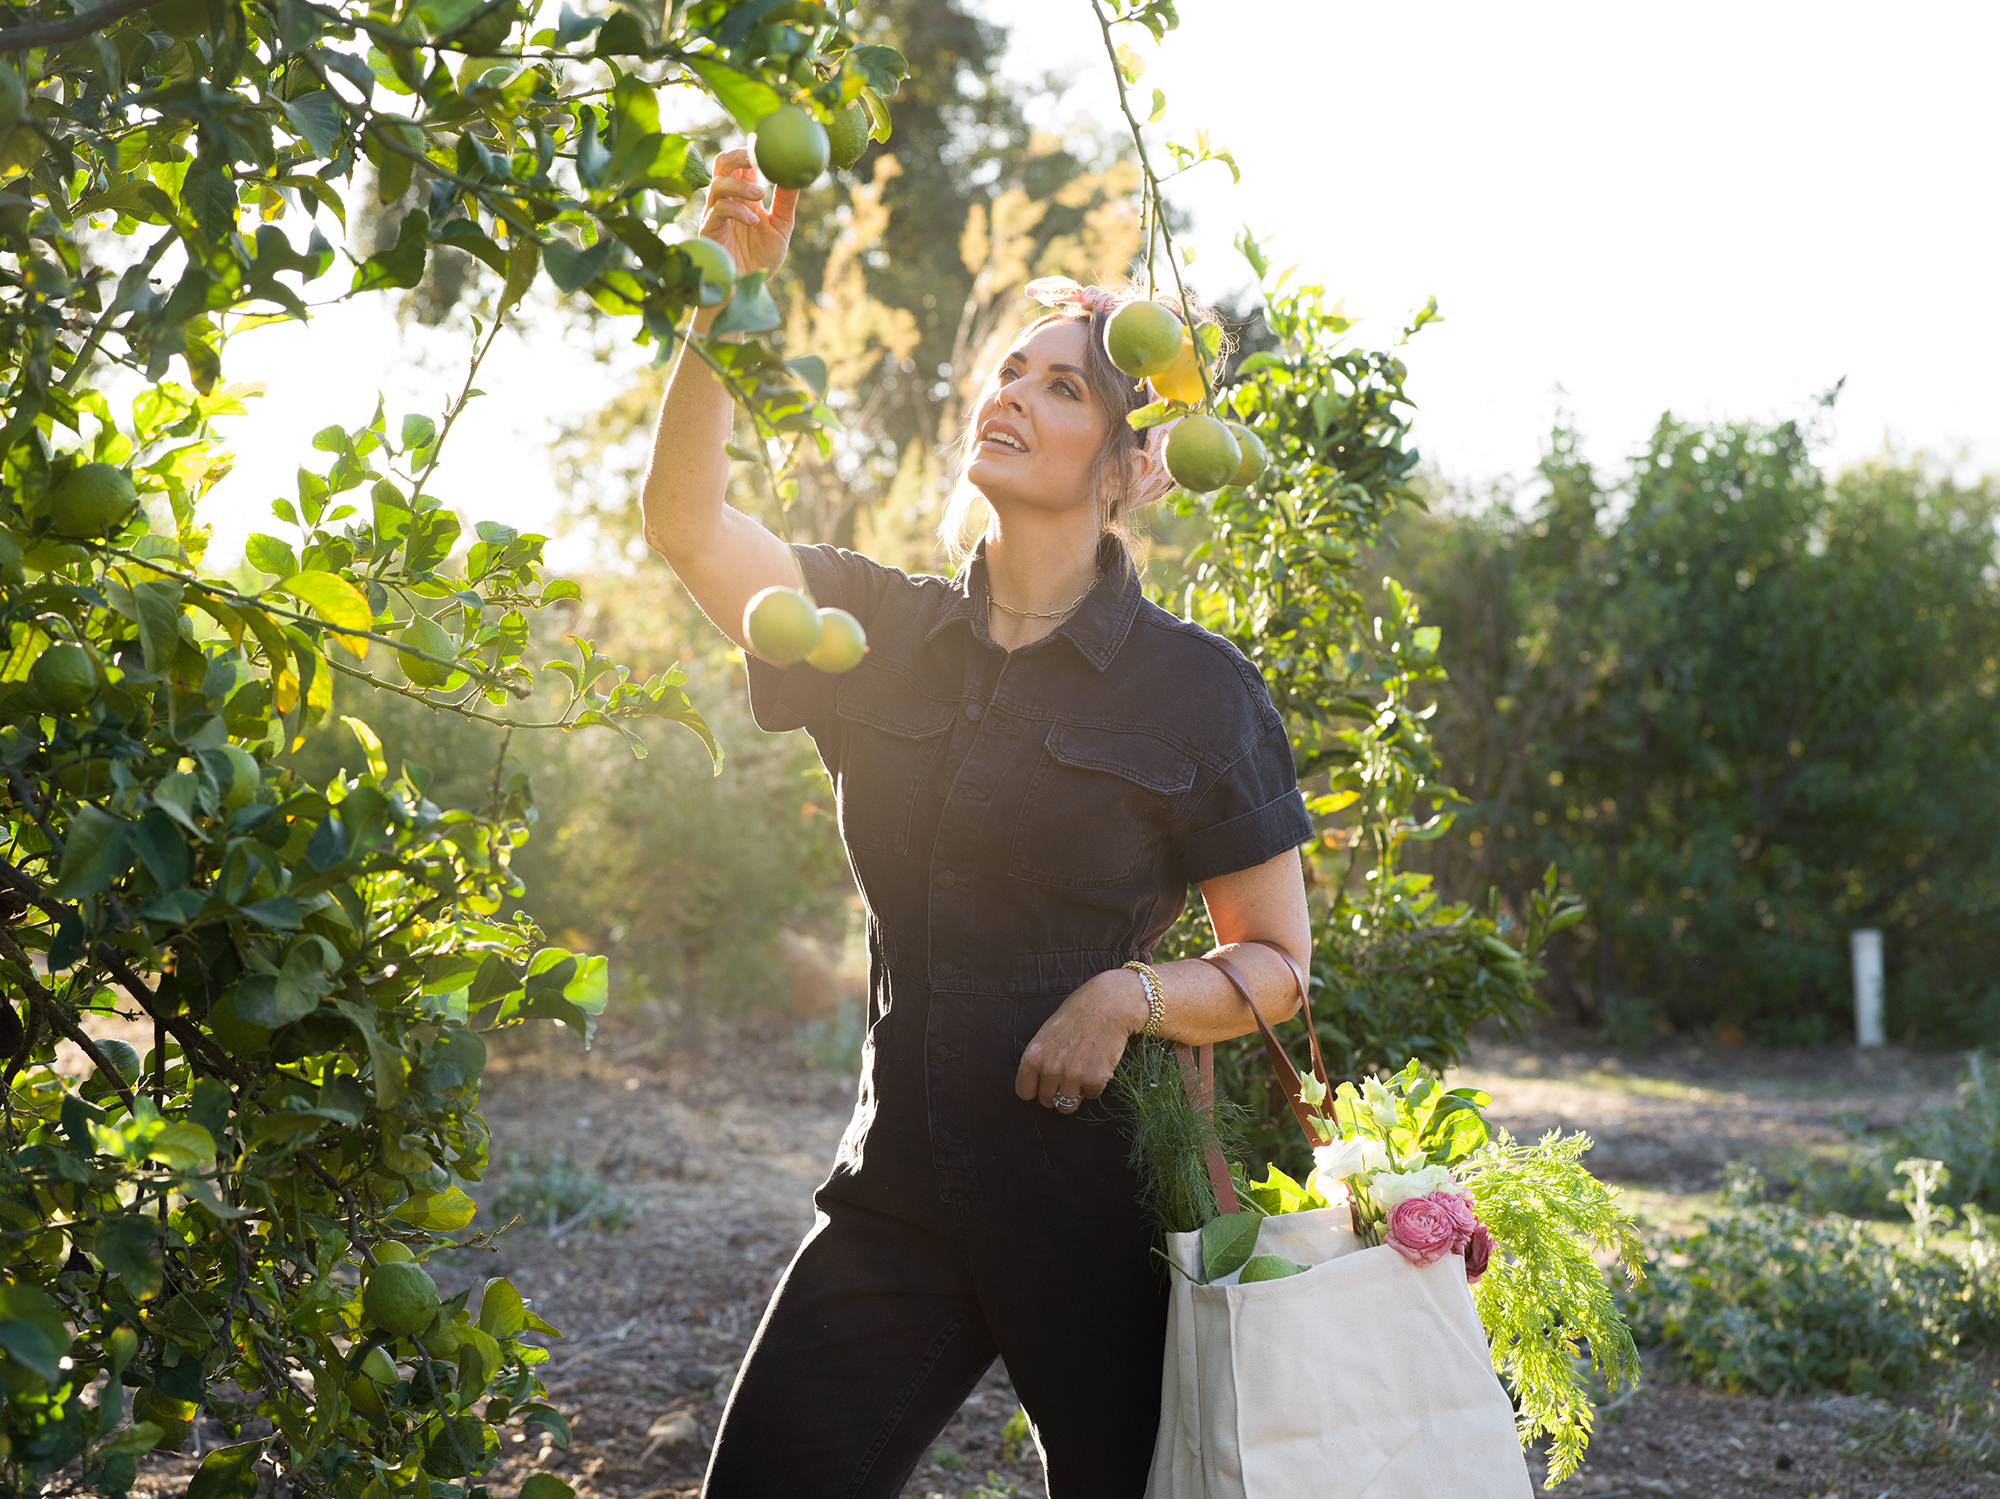 Woman picking apples.